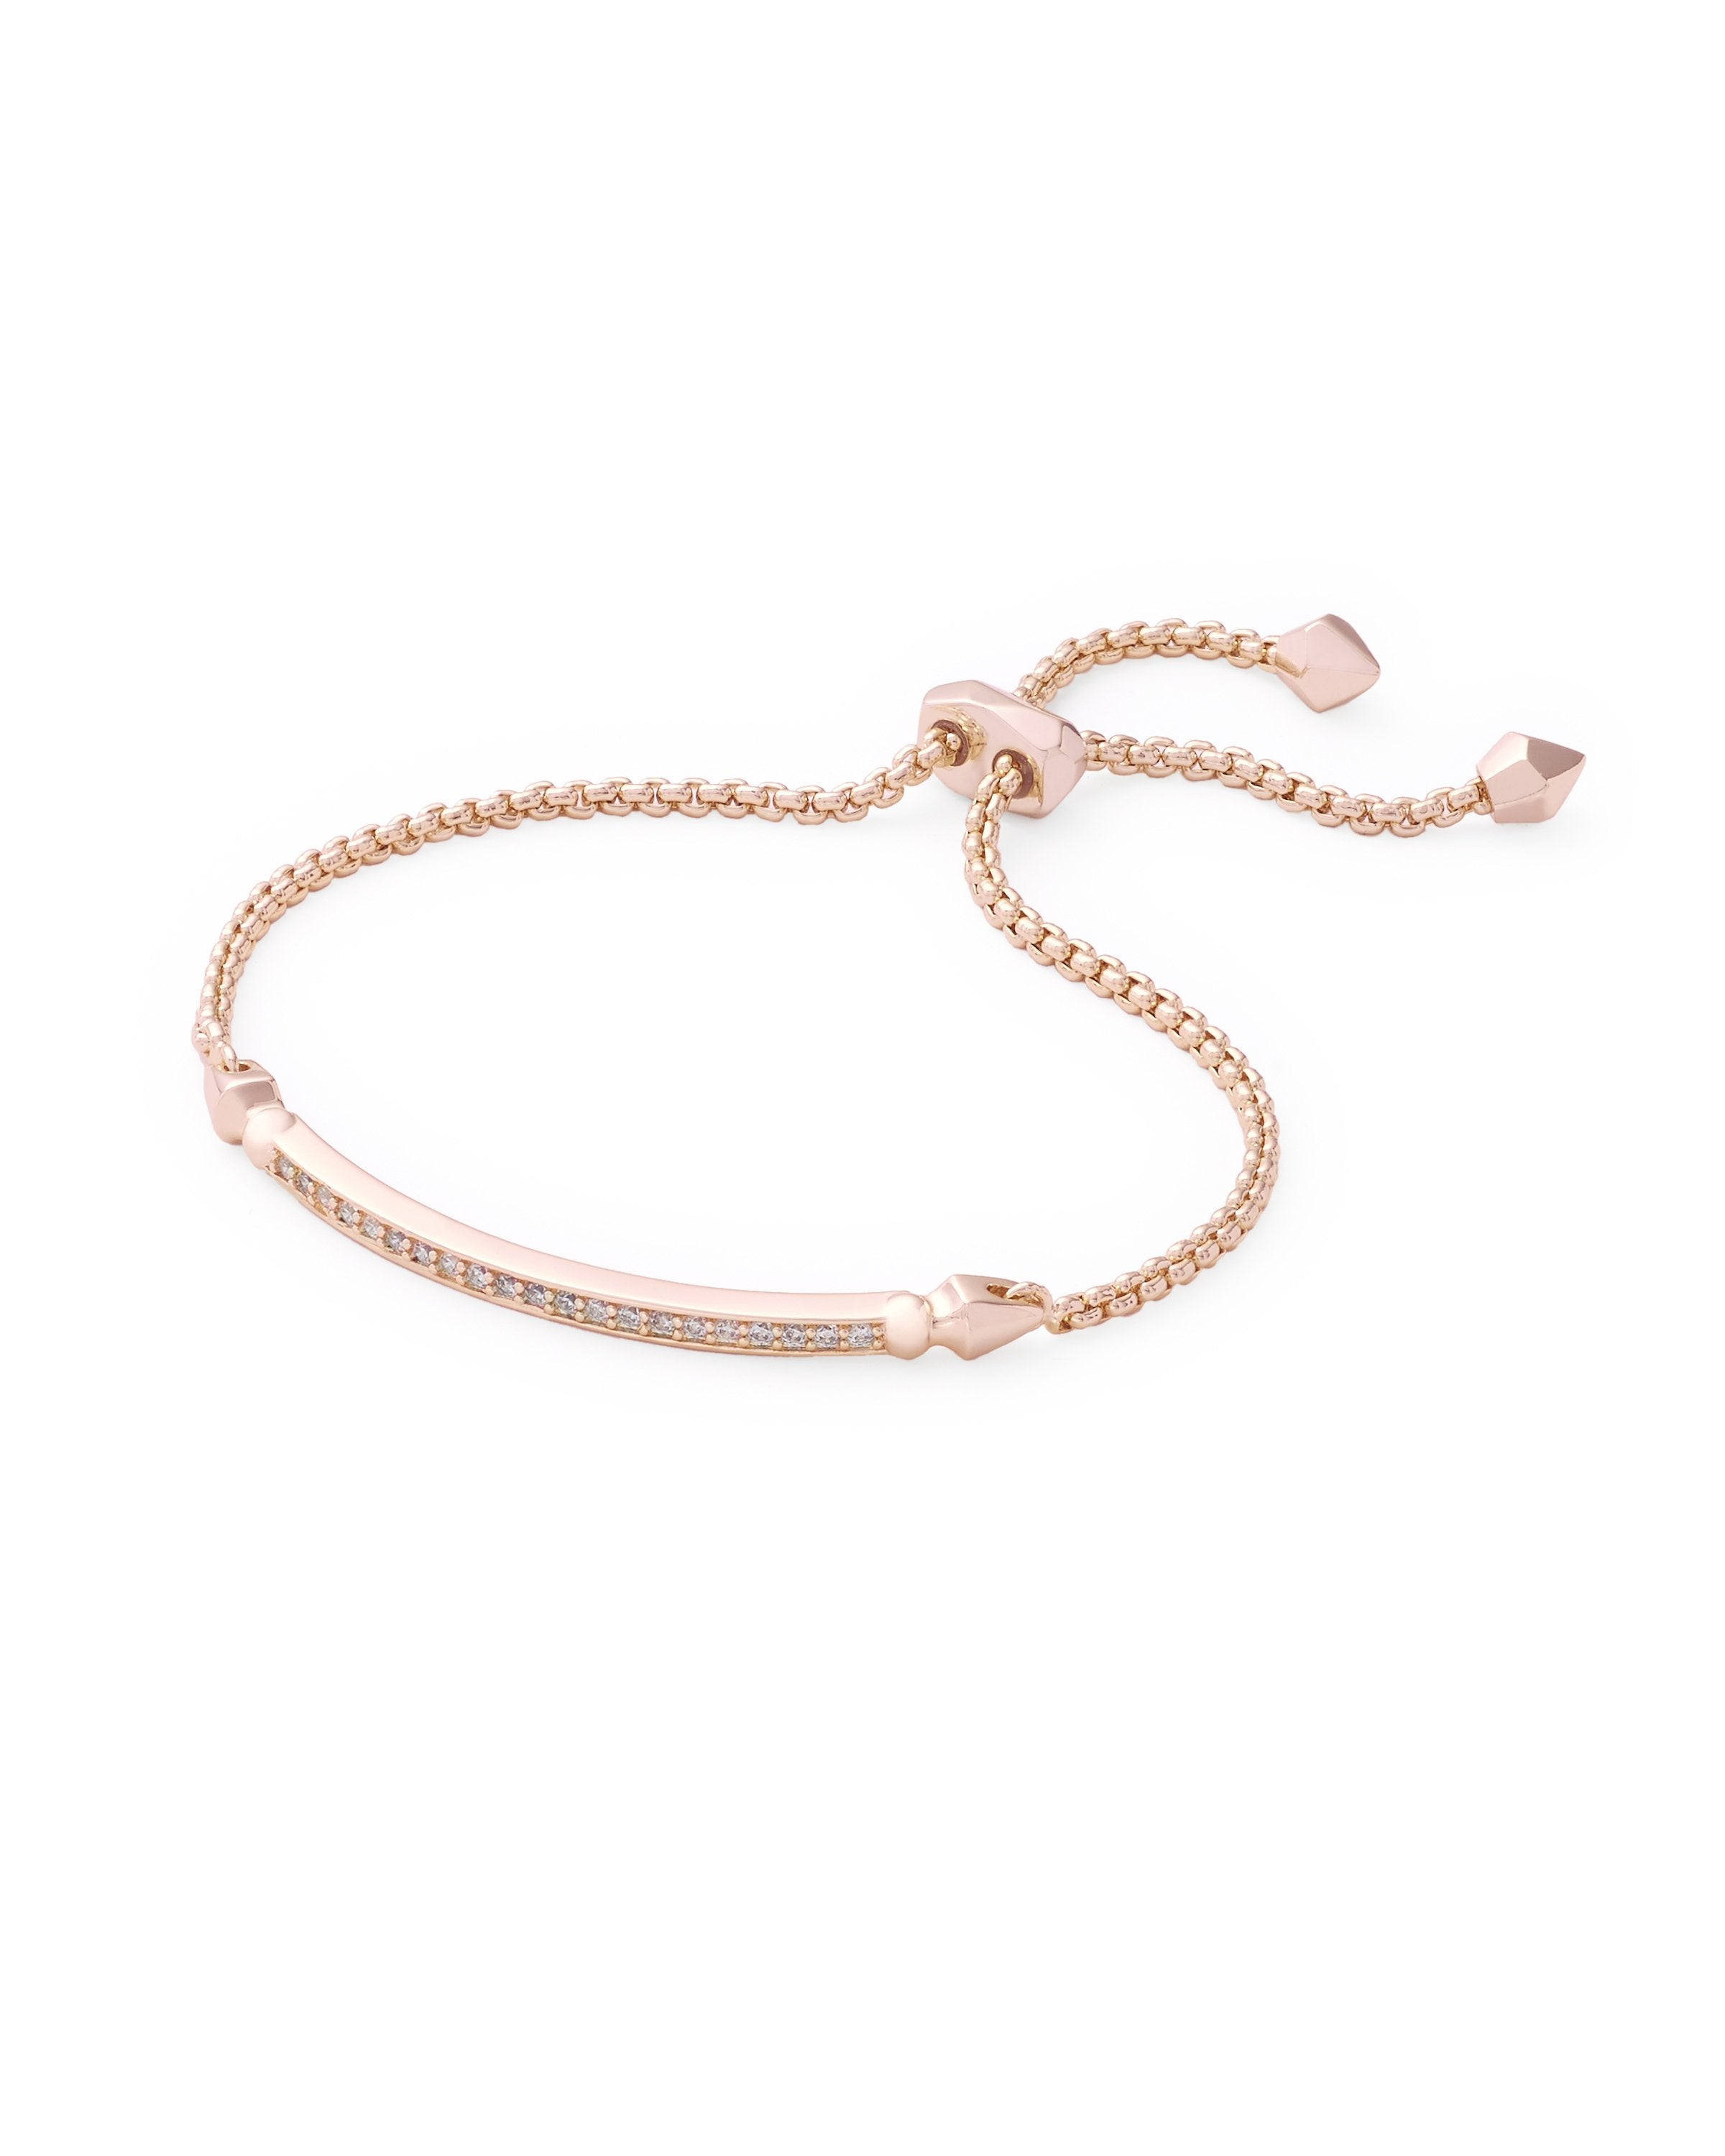 Ott Adjustable Chain Bracelet in Rose Gold Front View